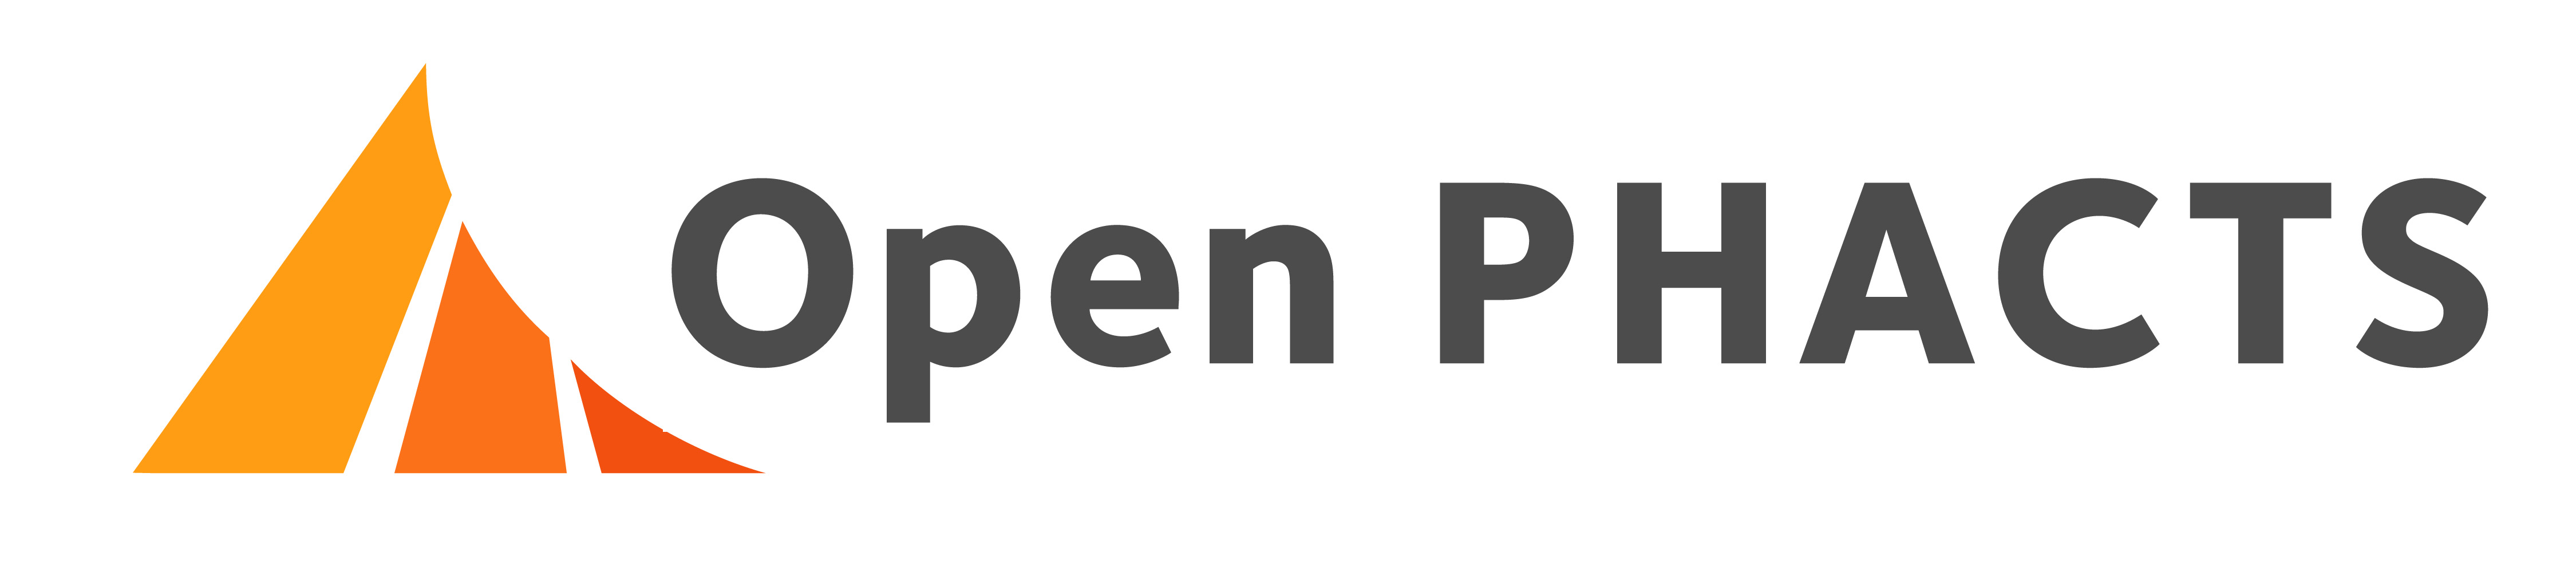 OpenPhacts logo